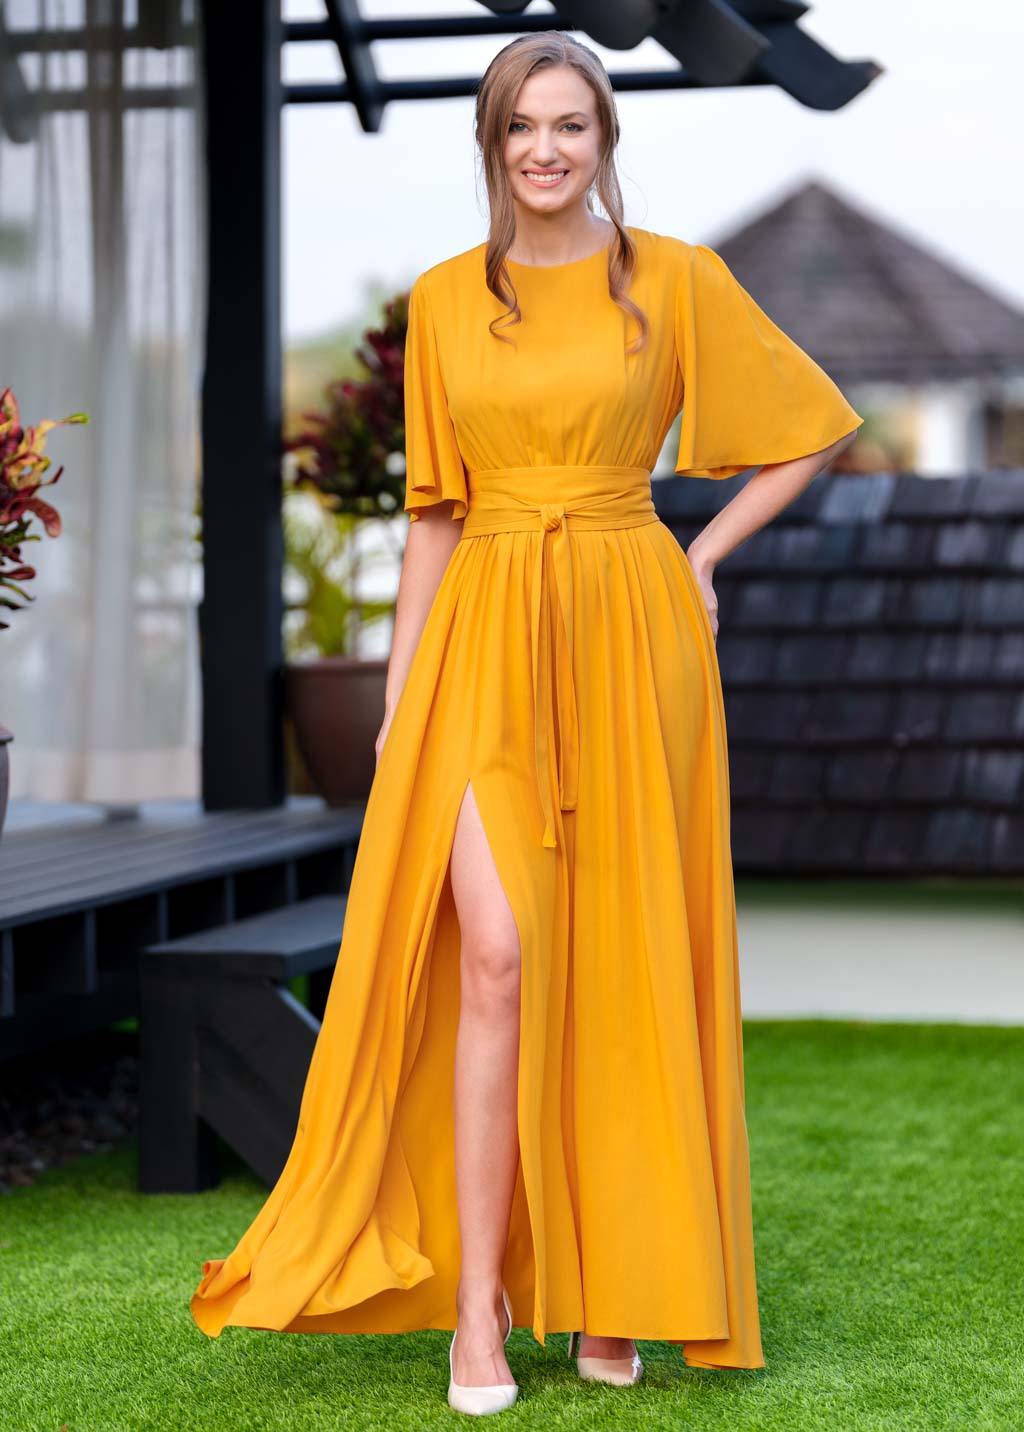 Honey yellow slit dress with belt